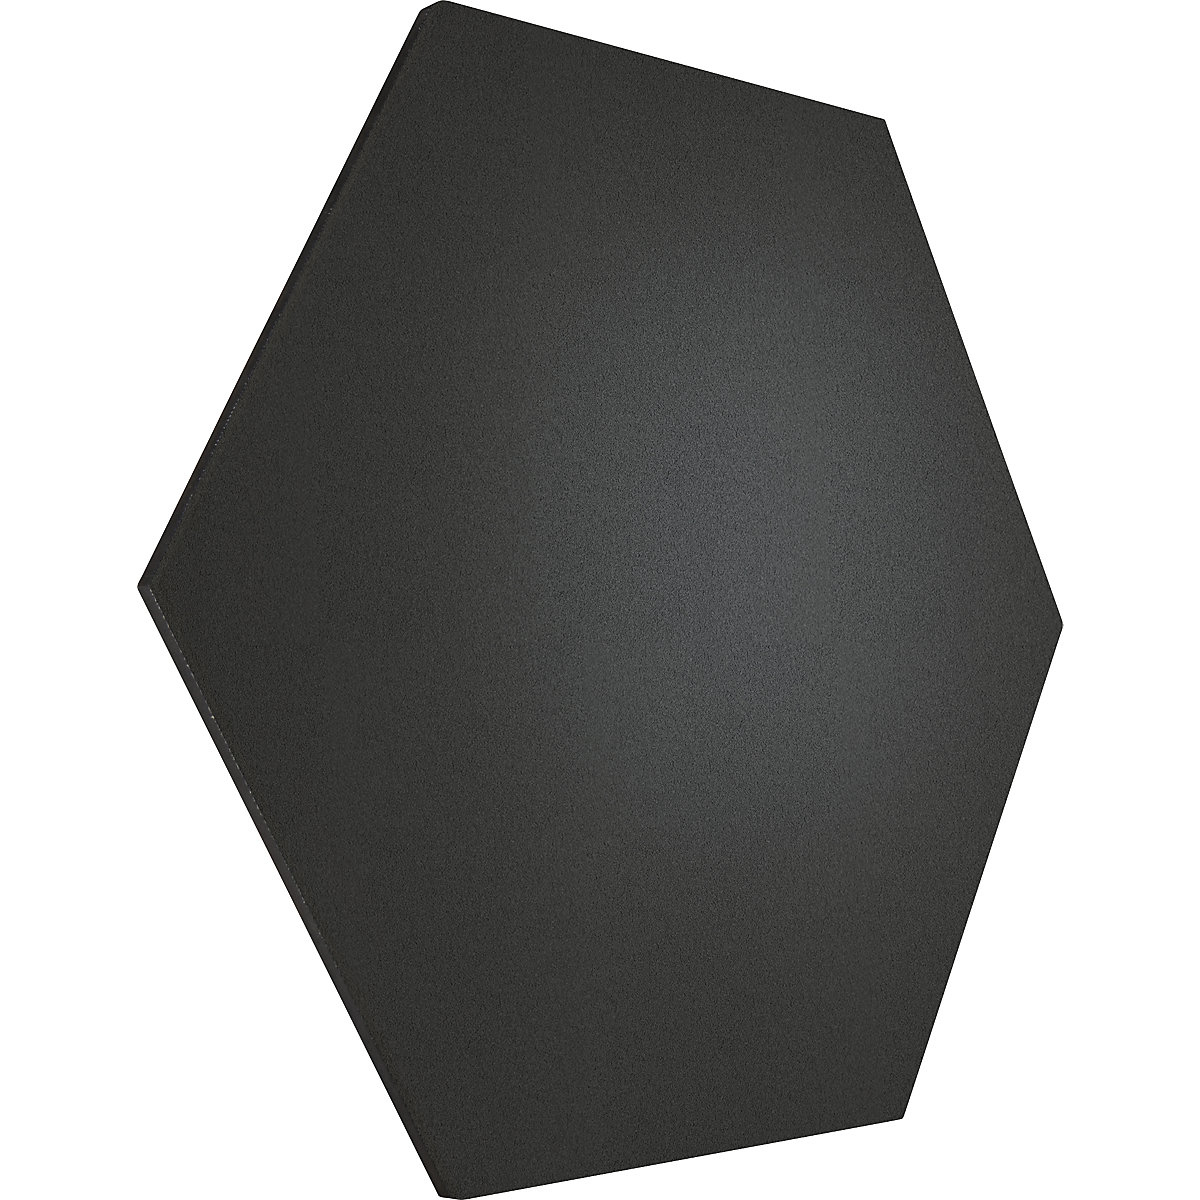 Hexagonal designer pin board – Chameleon, cork, WxH 600 x 600 mm, black-33